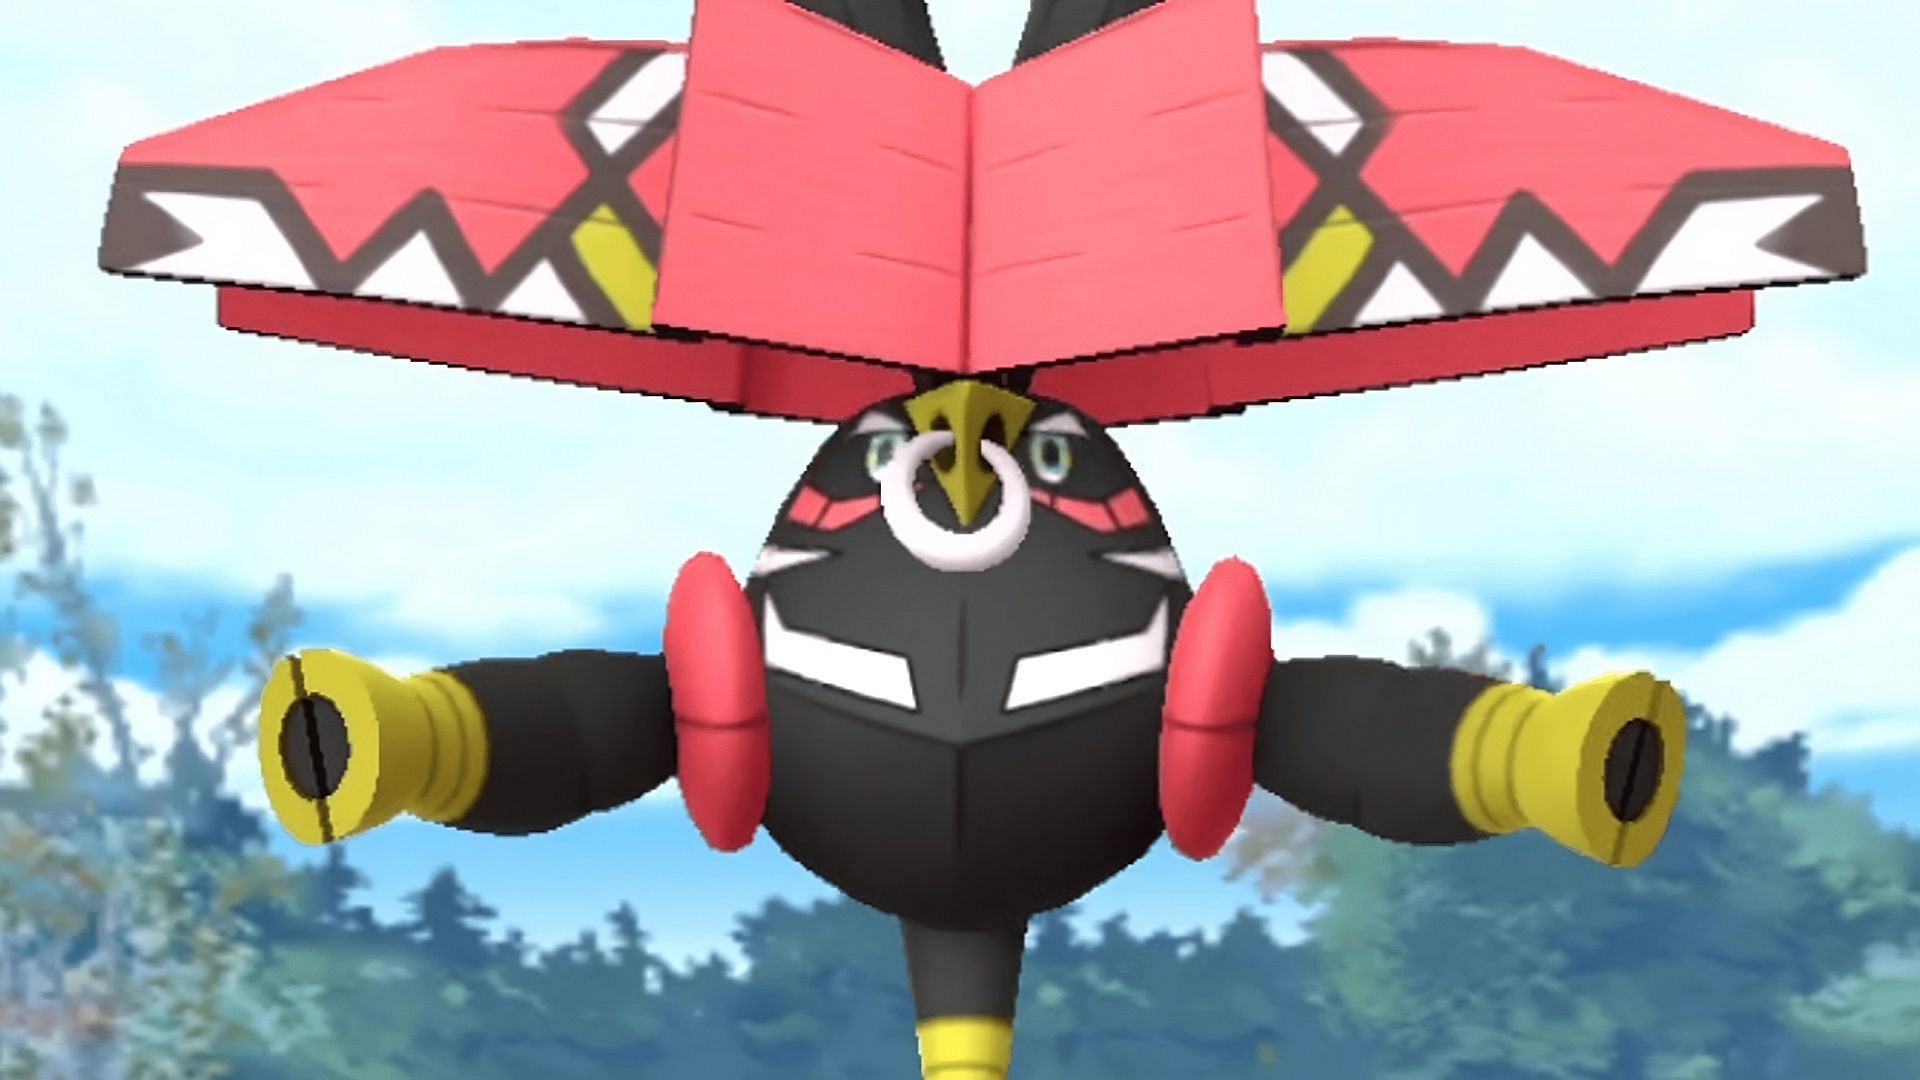 Tapu Bulu is one of the Guardian Deities of the Alola region in the Pokemon series.